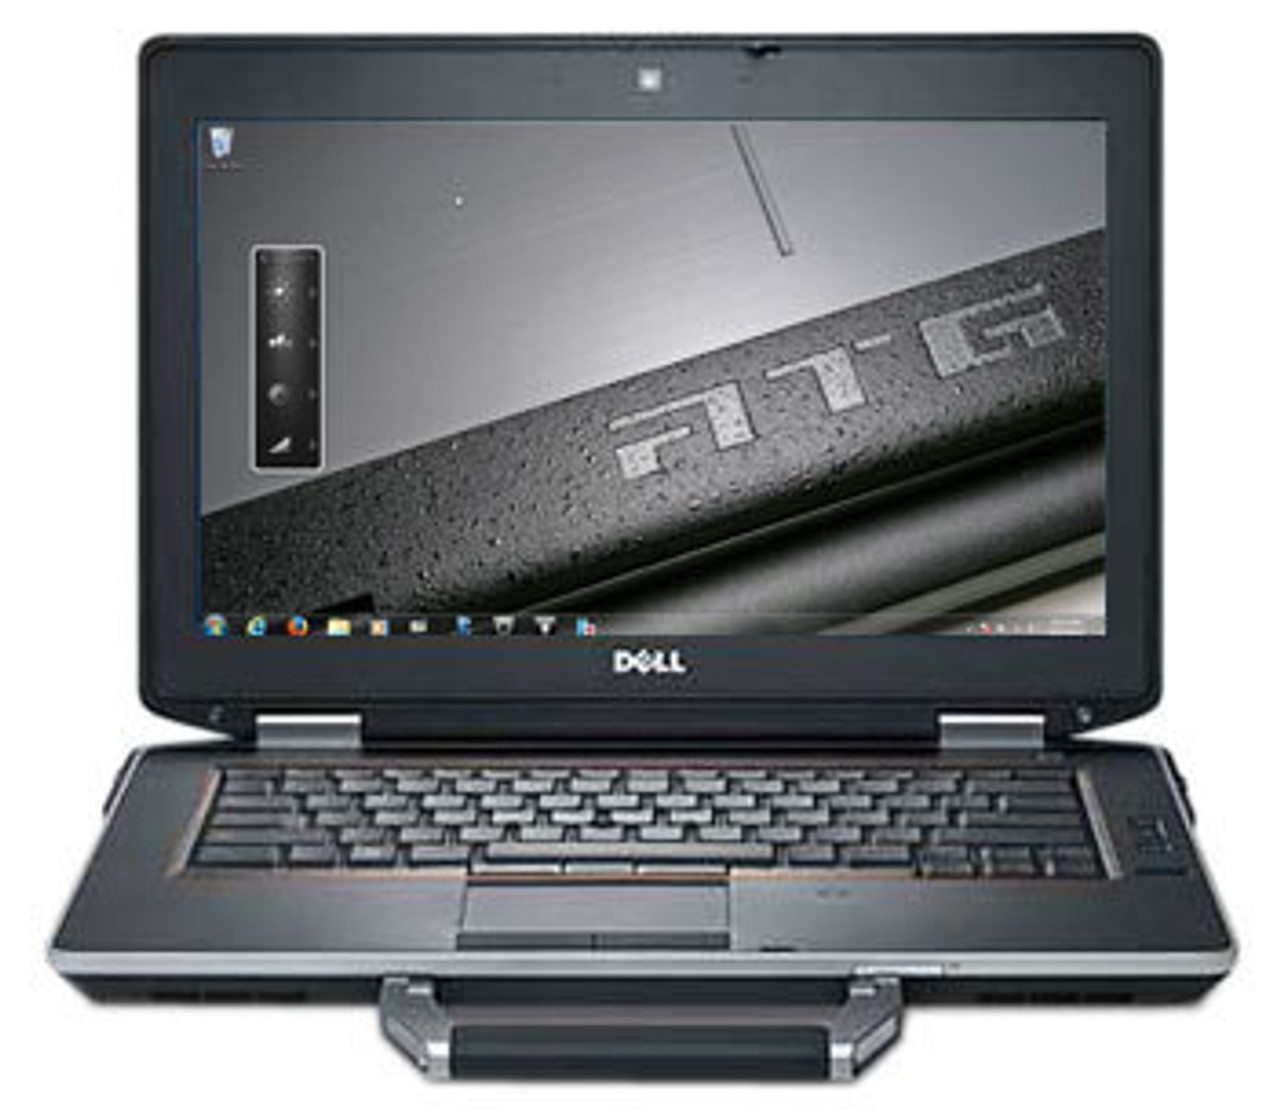 Dell Latitude E6420 ATG 14" Laptop Core i5-2540M 2.6GHz 4GB Memory 320GB HDD